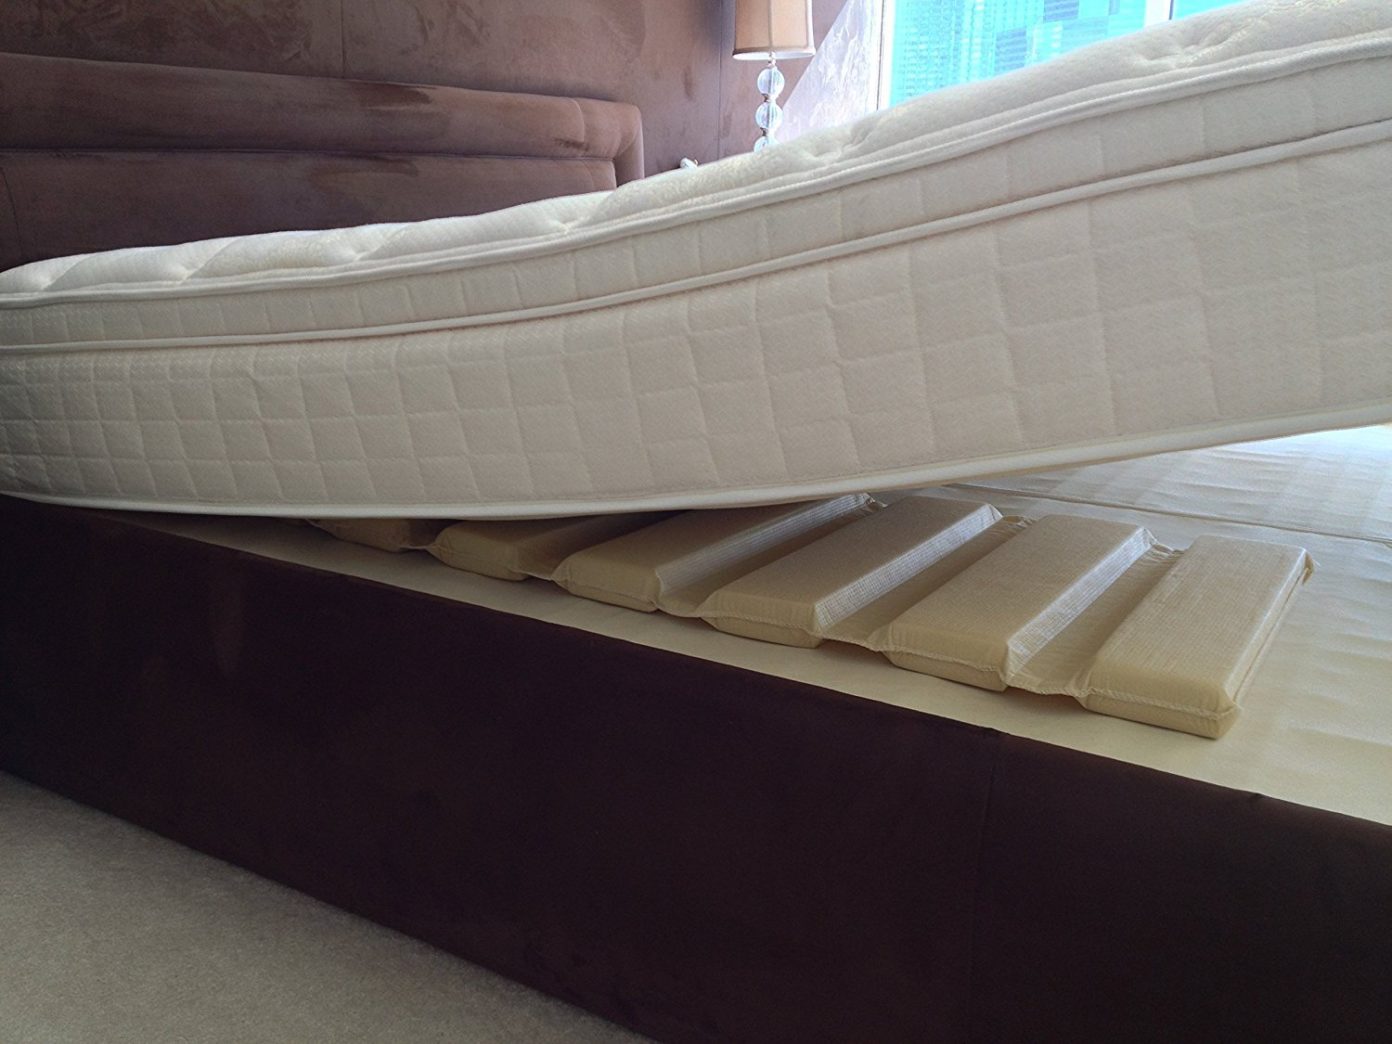 firm support under mattress